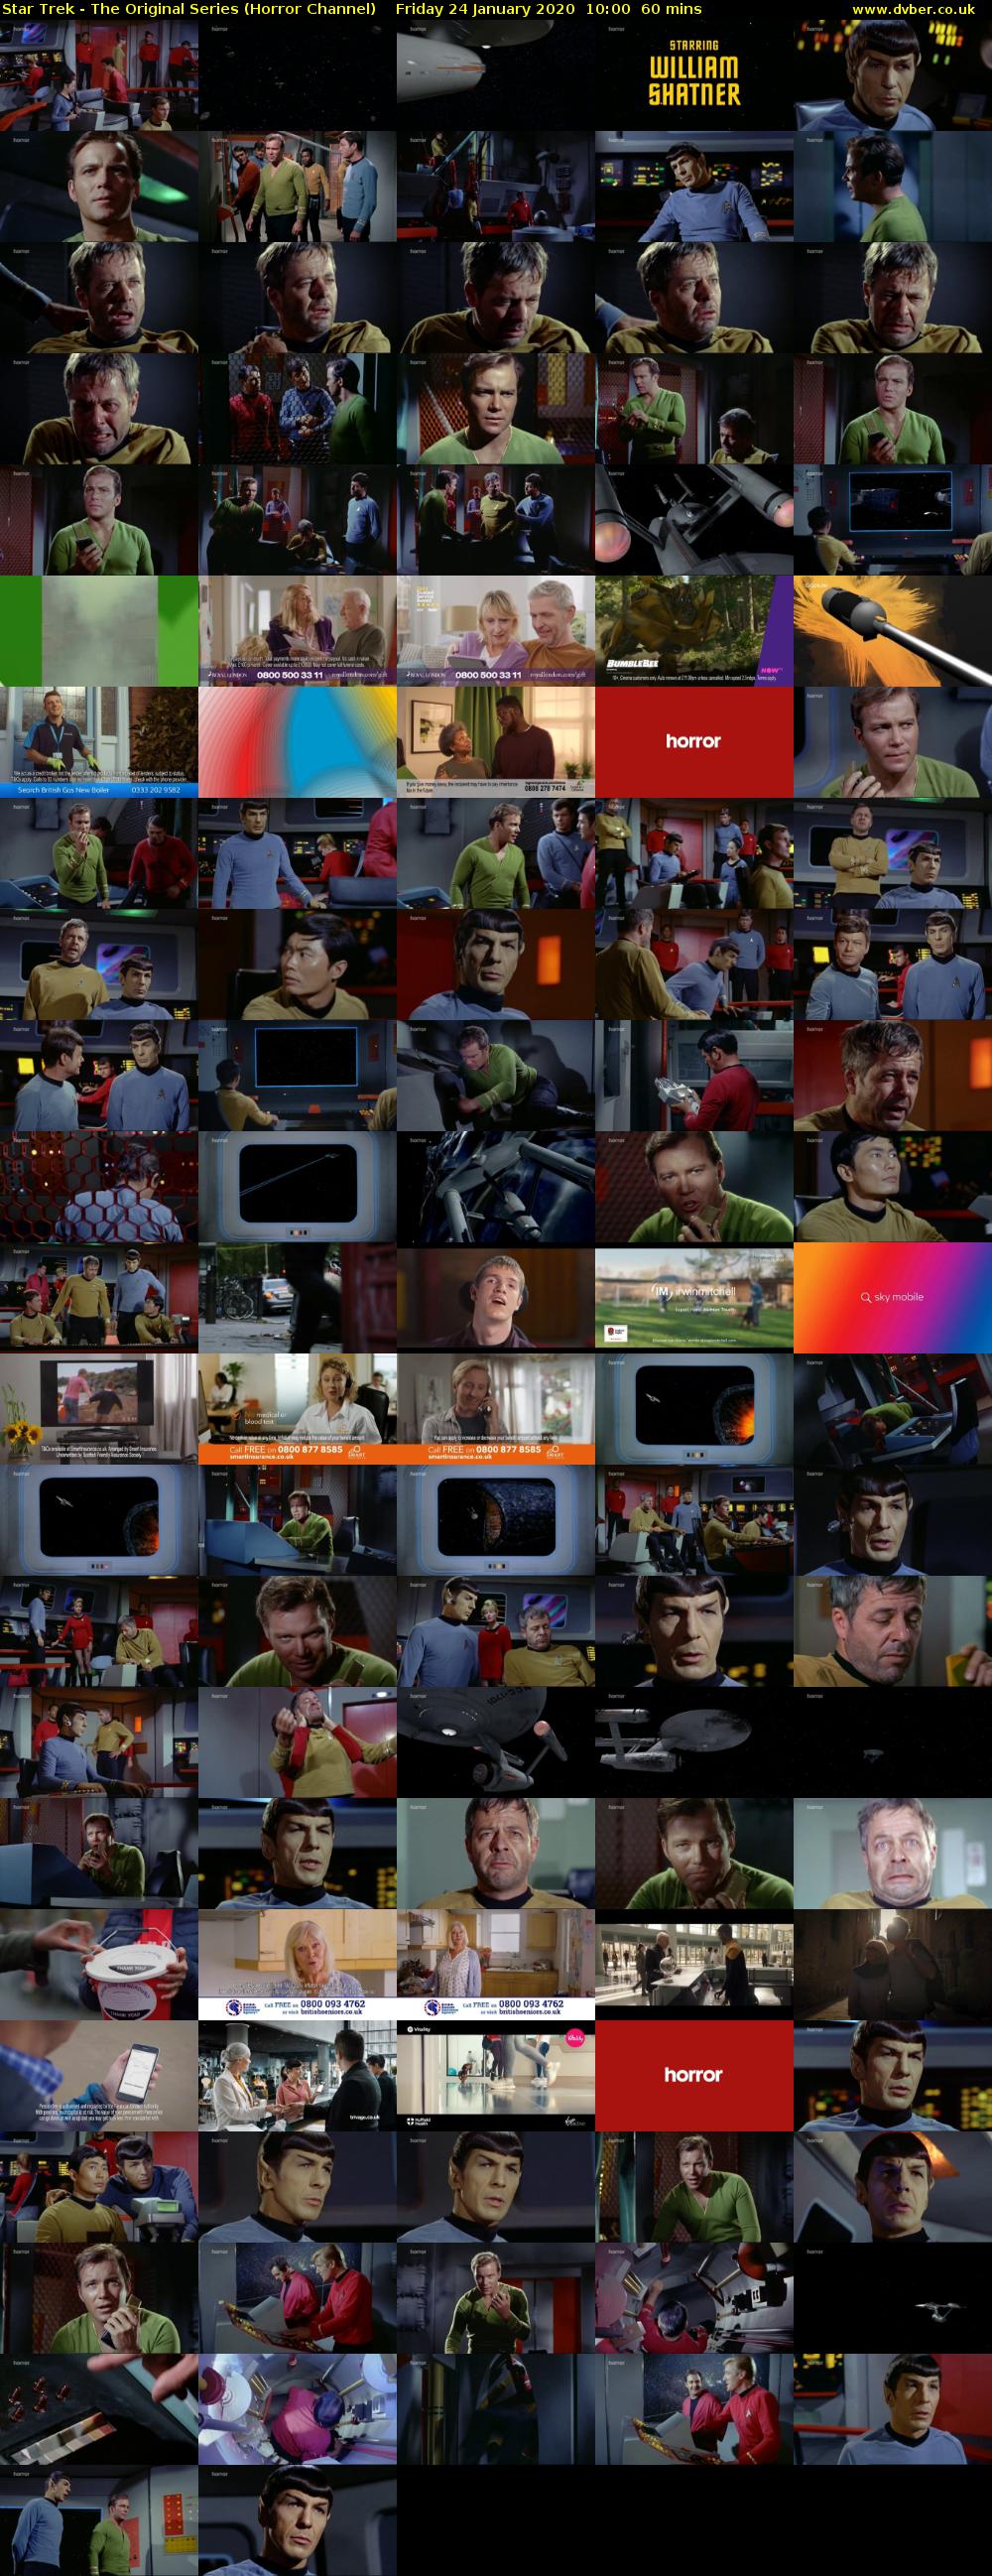 Star Trek - The Original Series (Horror Channel) Friday 24 January 2020 10:00 - 11:00